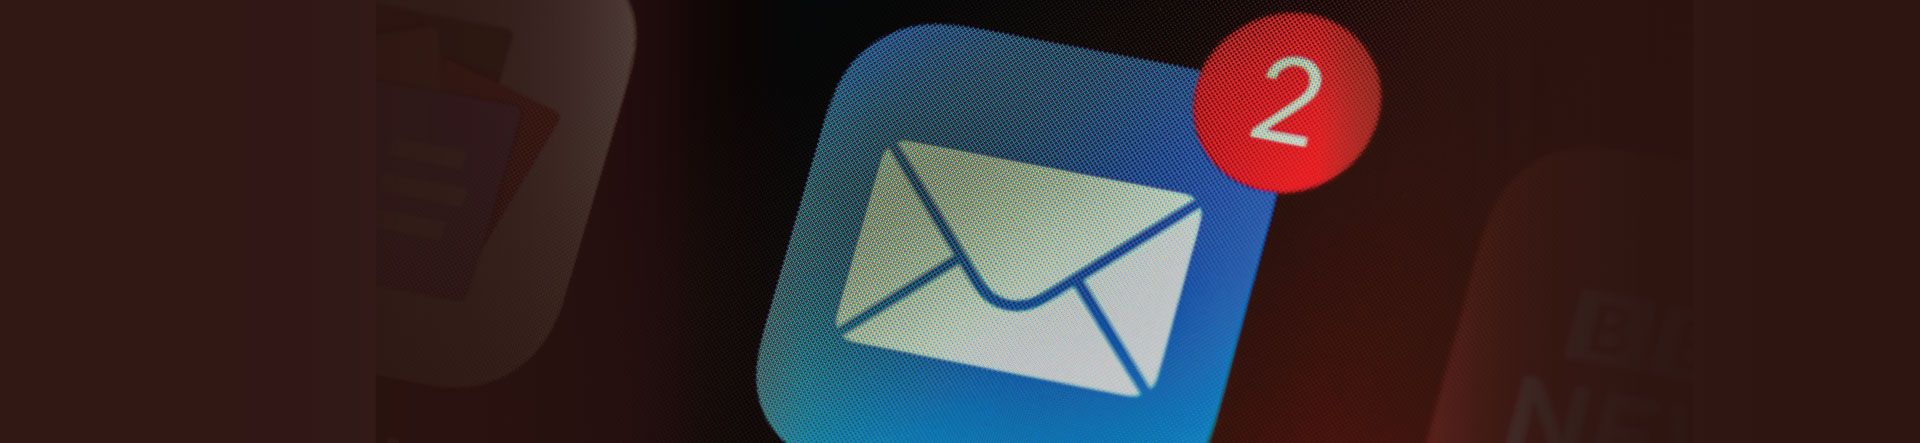 Junk emails - email inbox symbol